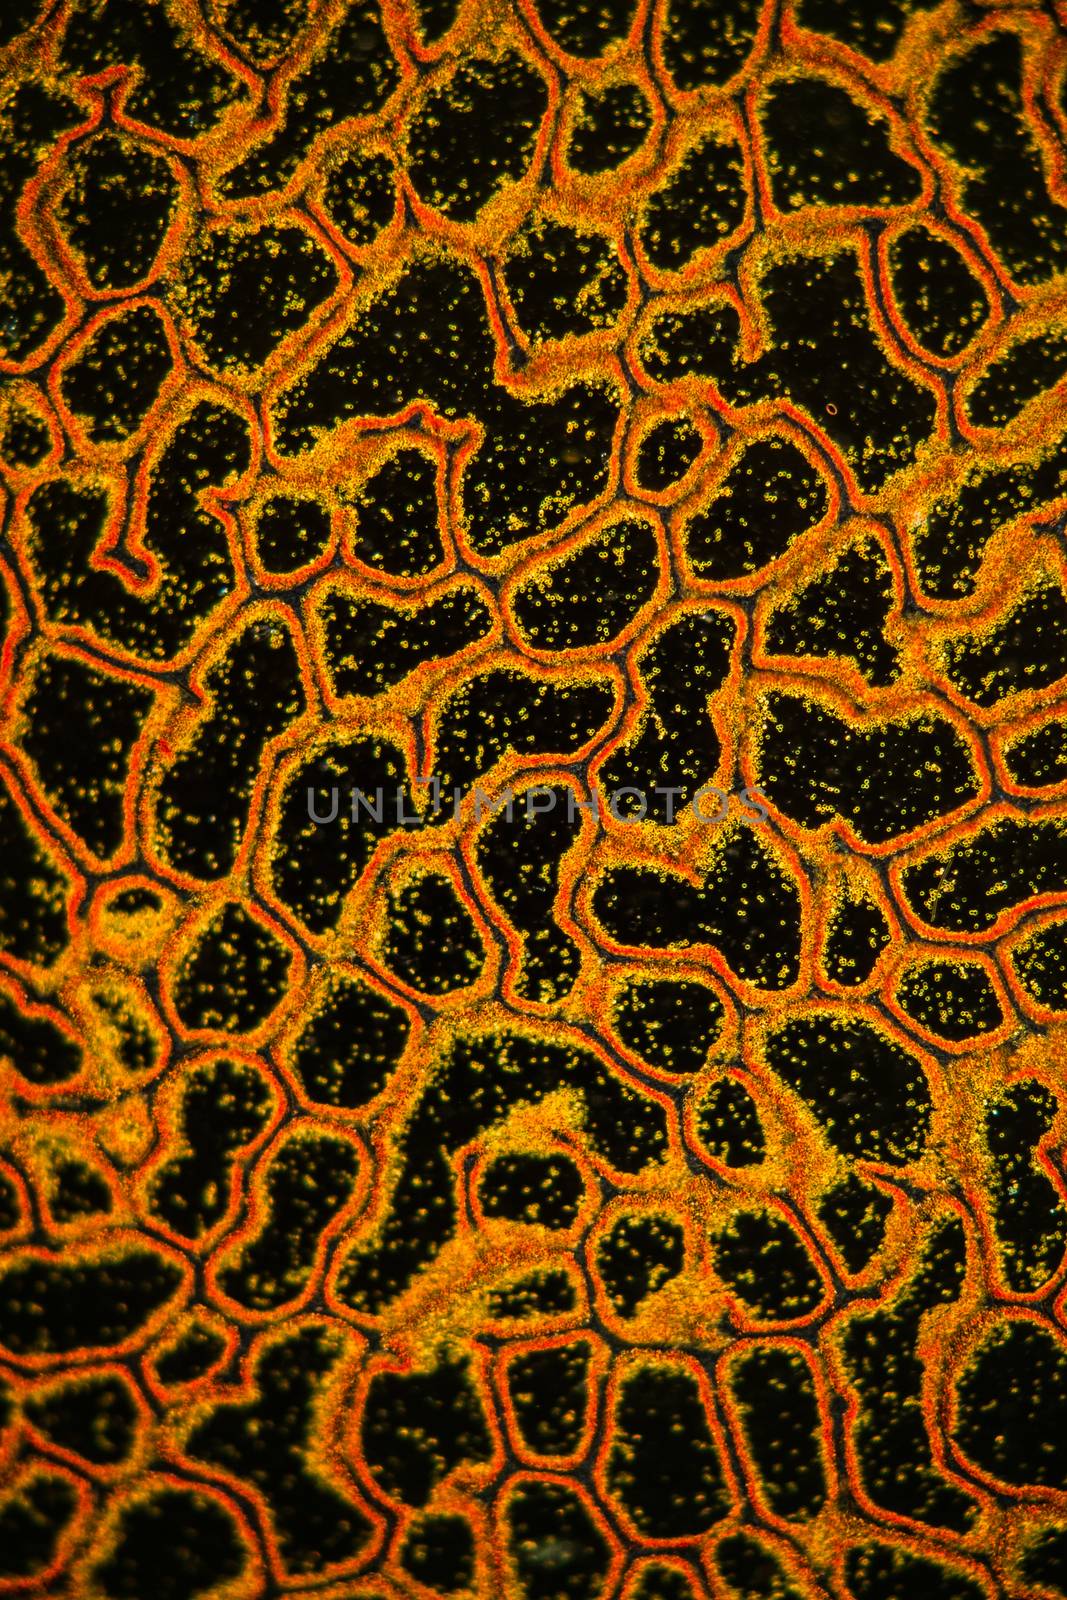 Bovist mushroom mushroom cap under the microscope 100x by Dr-Lange